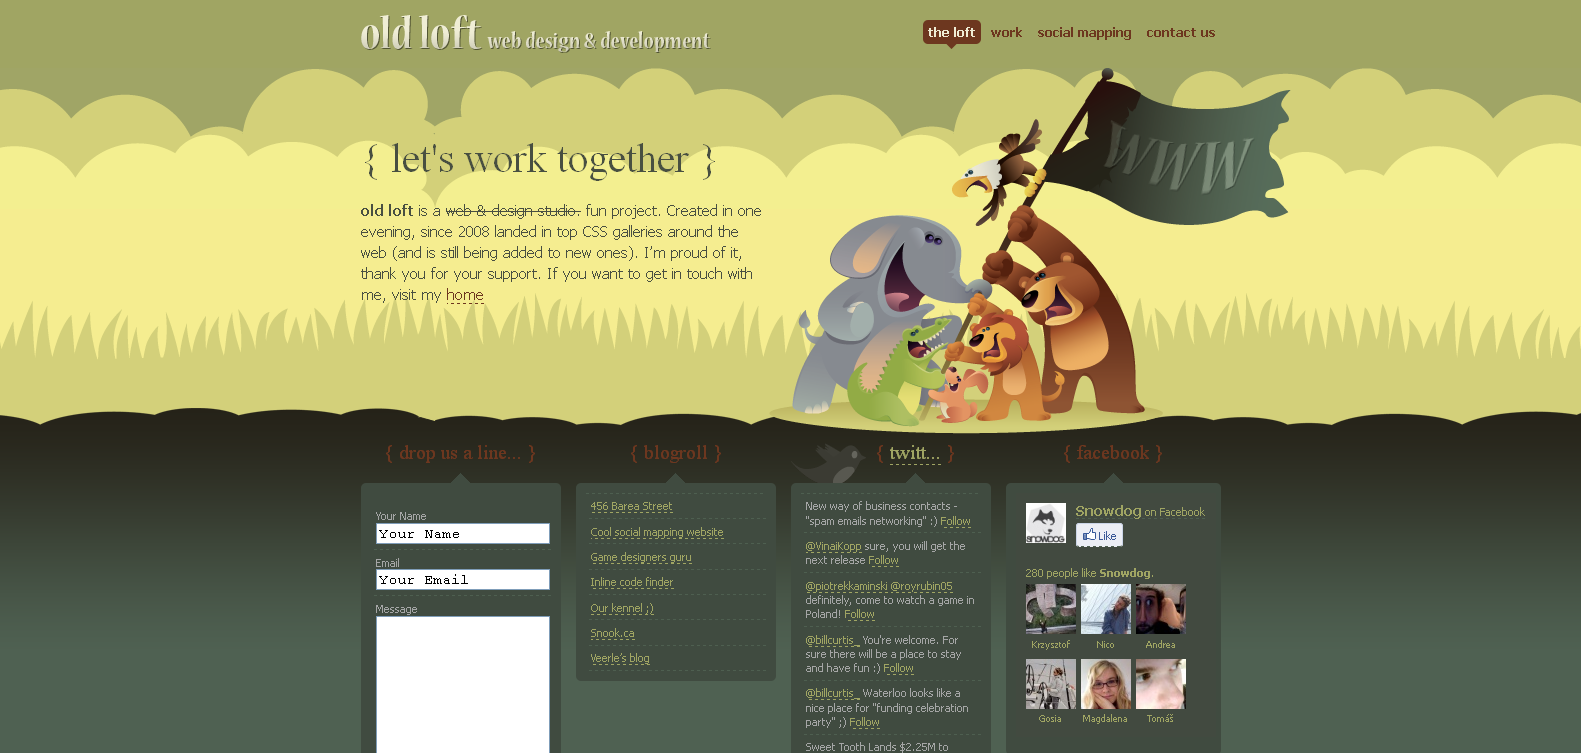 www.oldloft.com